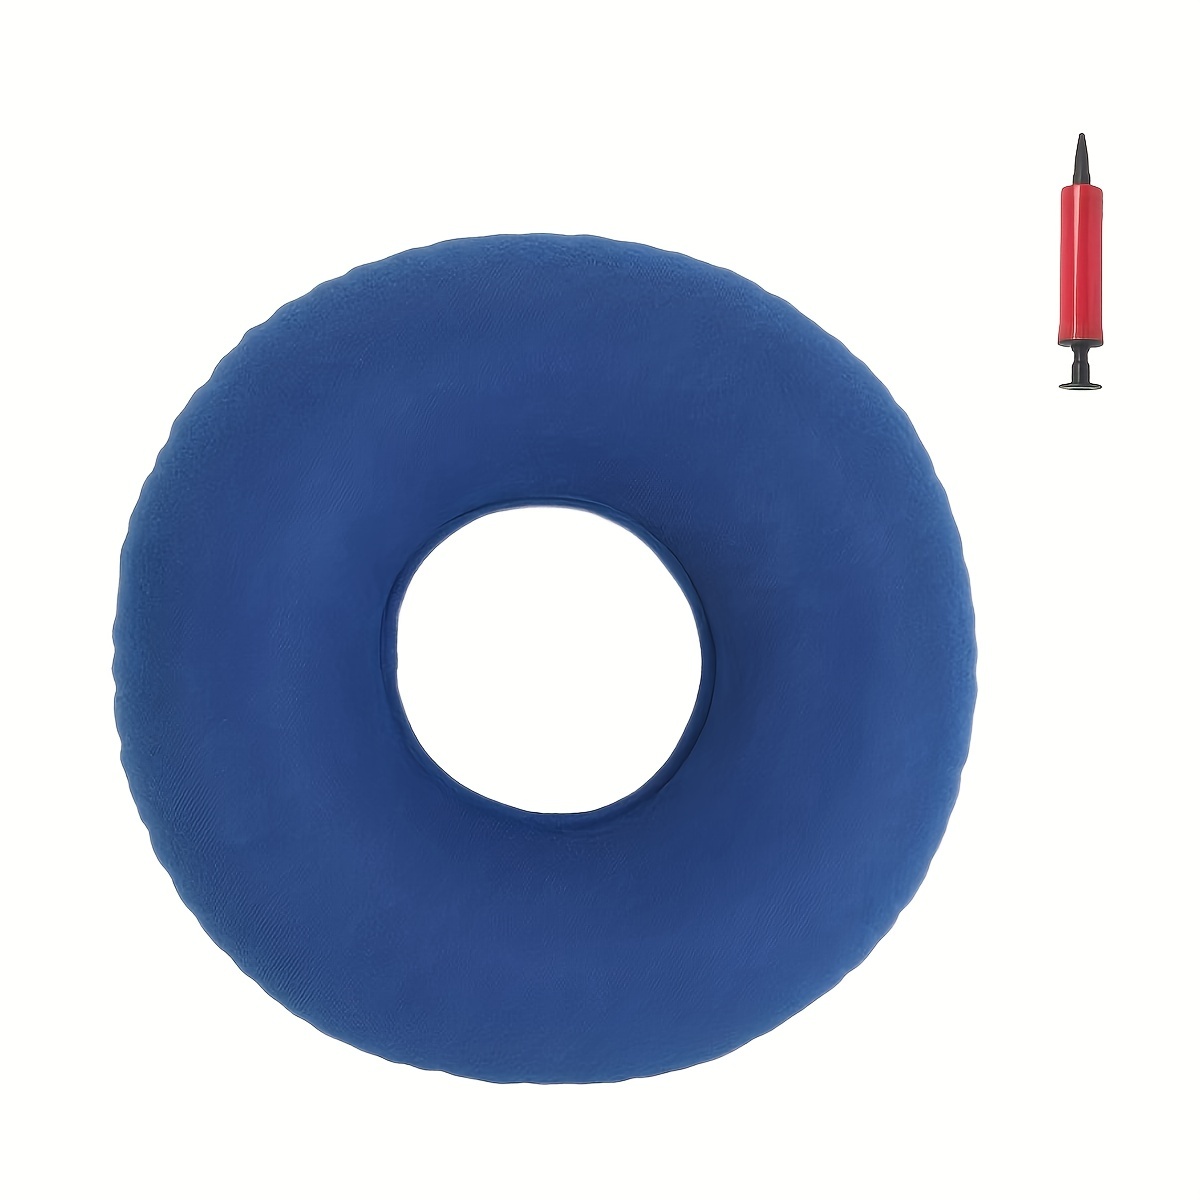 Inflatable Donut Pillow for Tailbone Pain,Hemorrhoid Pillow,BBL